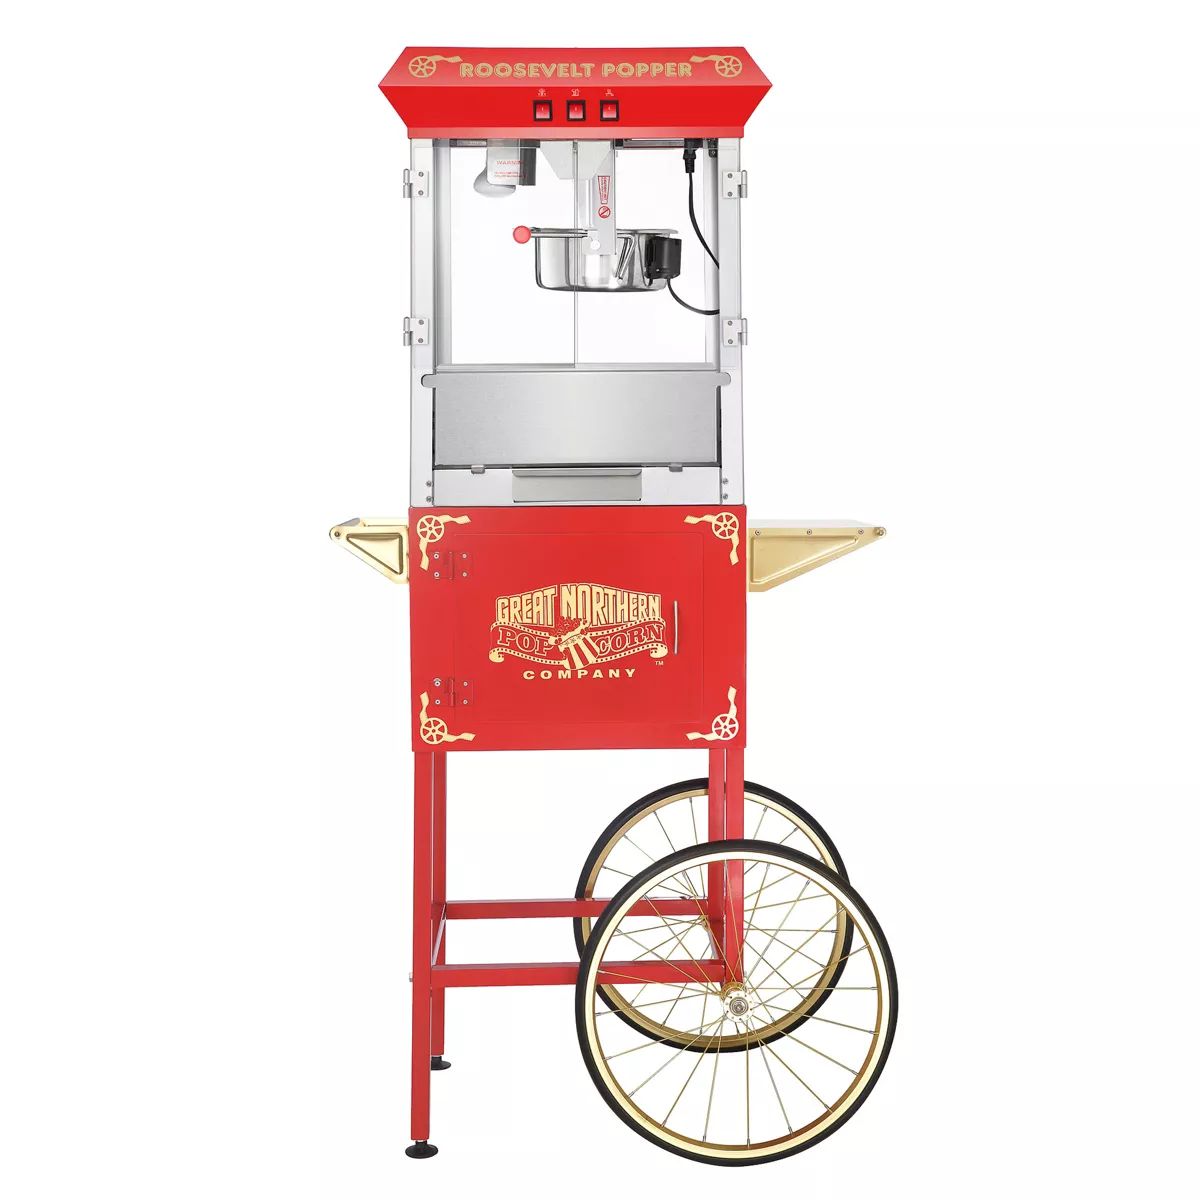 Great Northern Popcorn 8 oz. Roosevelt Popcorn Machine - Stainless-Steel Kettle, Heated Warming D... | Target